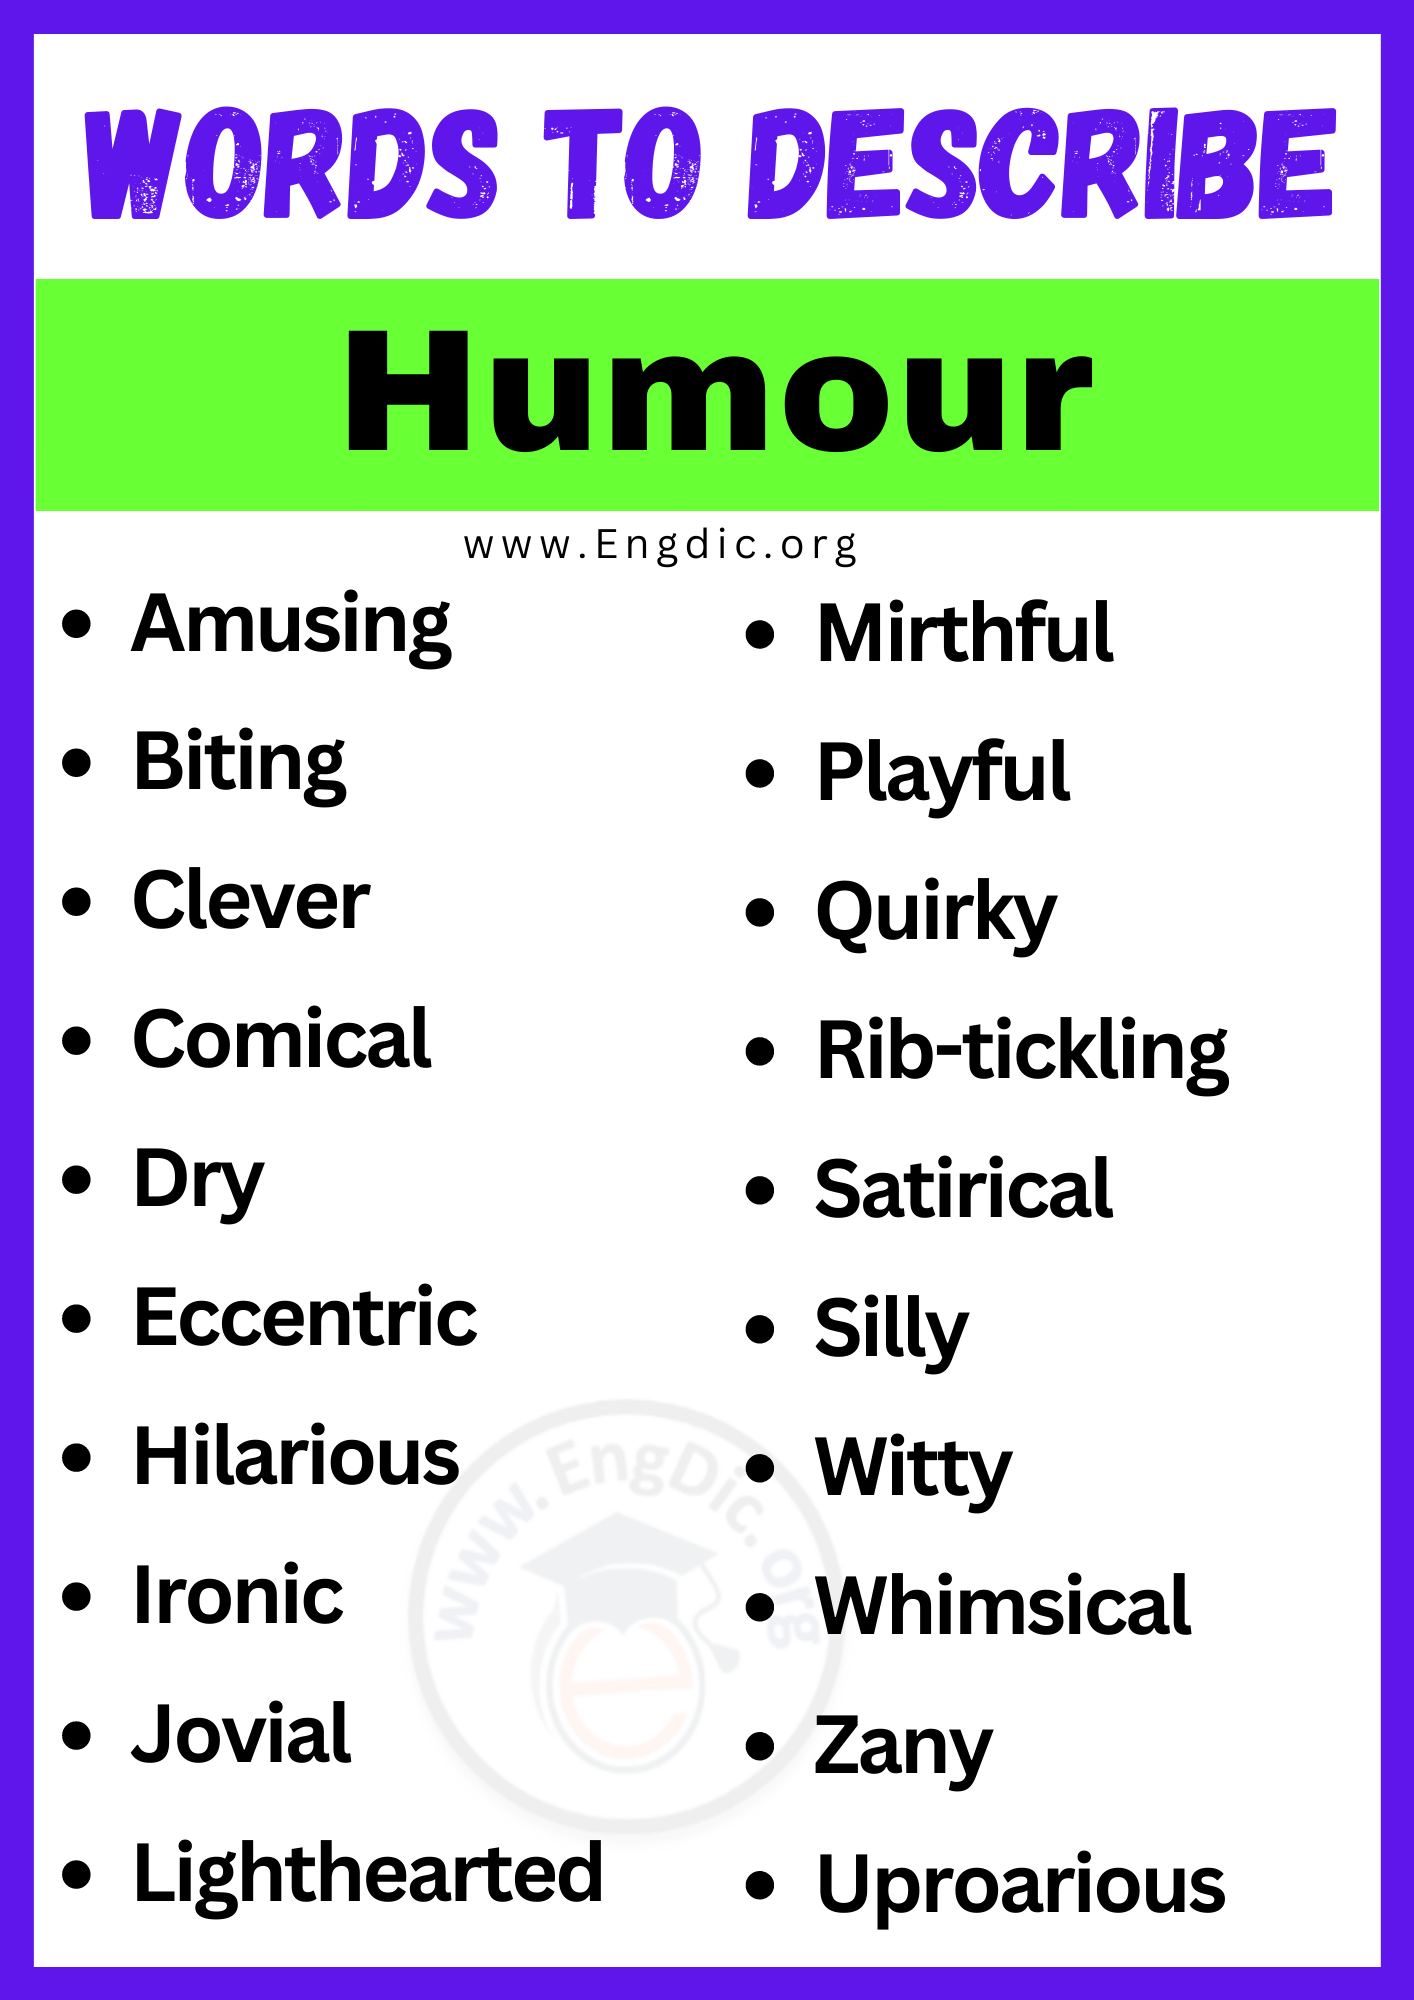 Words to Describe Humour